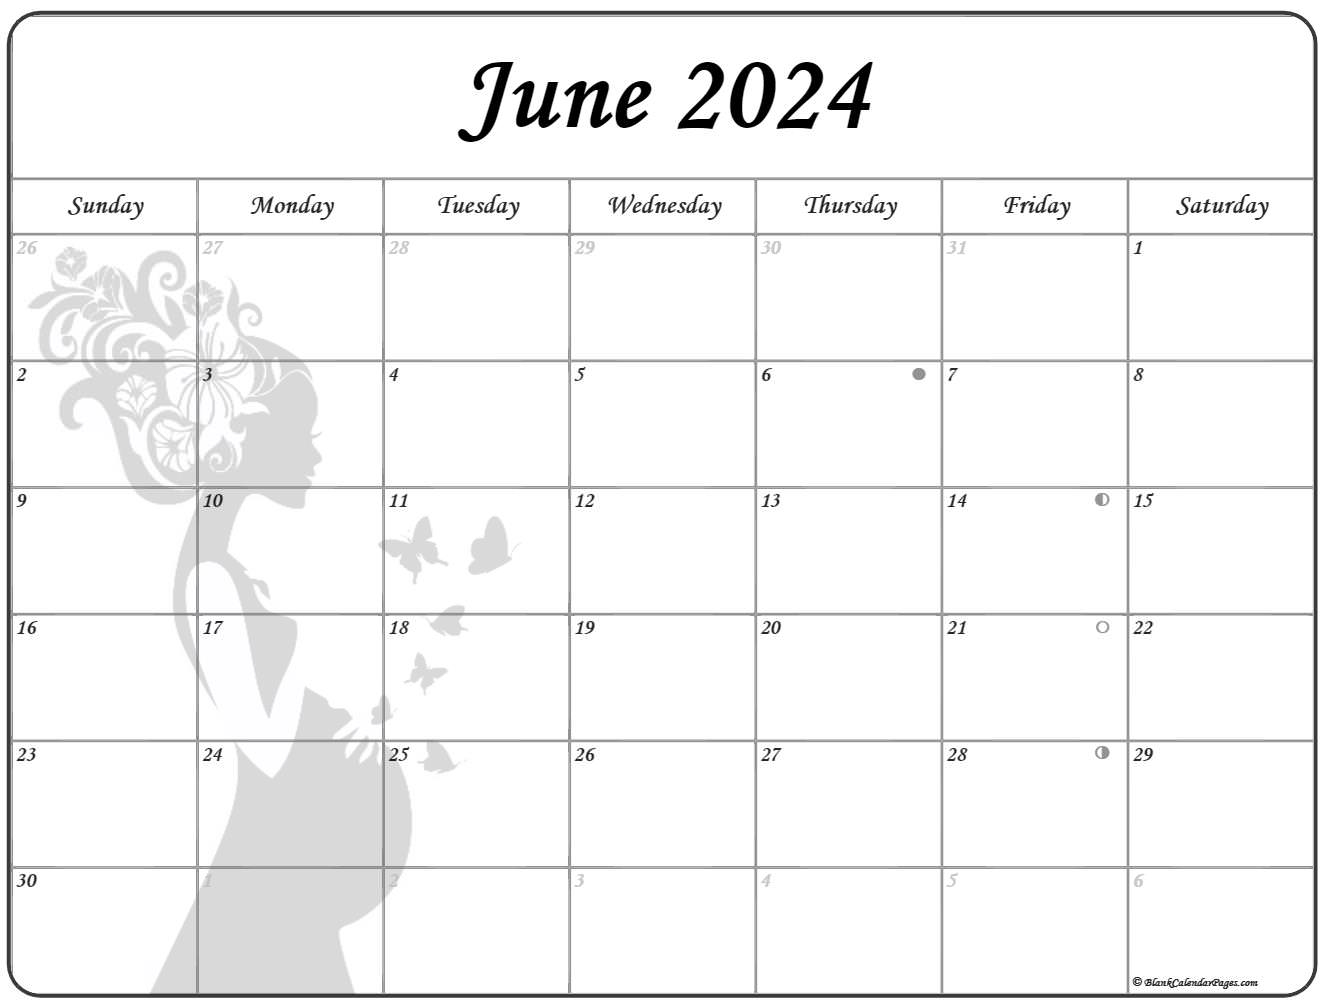 June 2020 Pregnancy Calendar